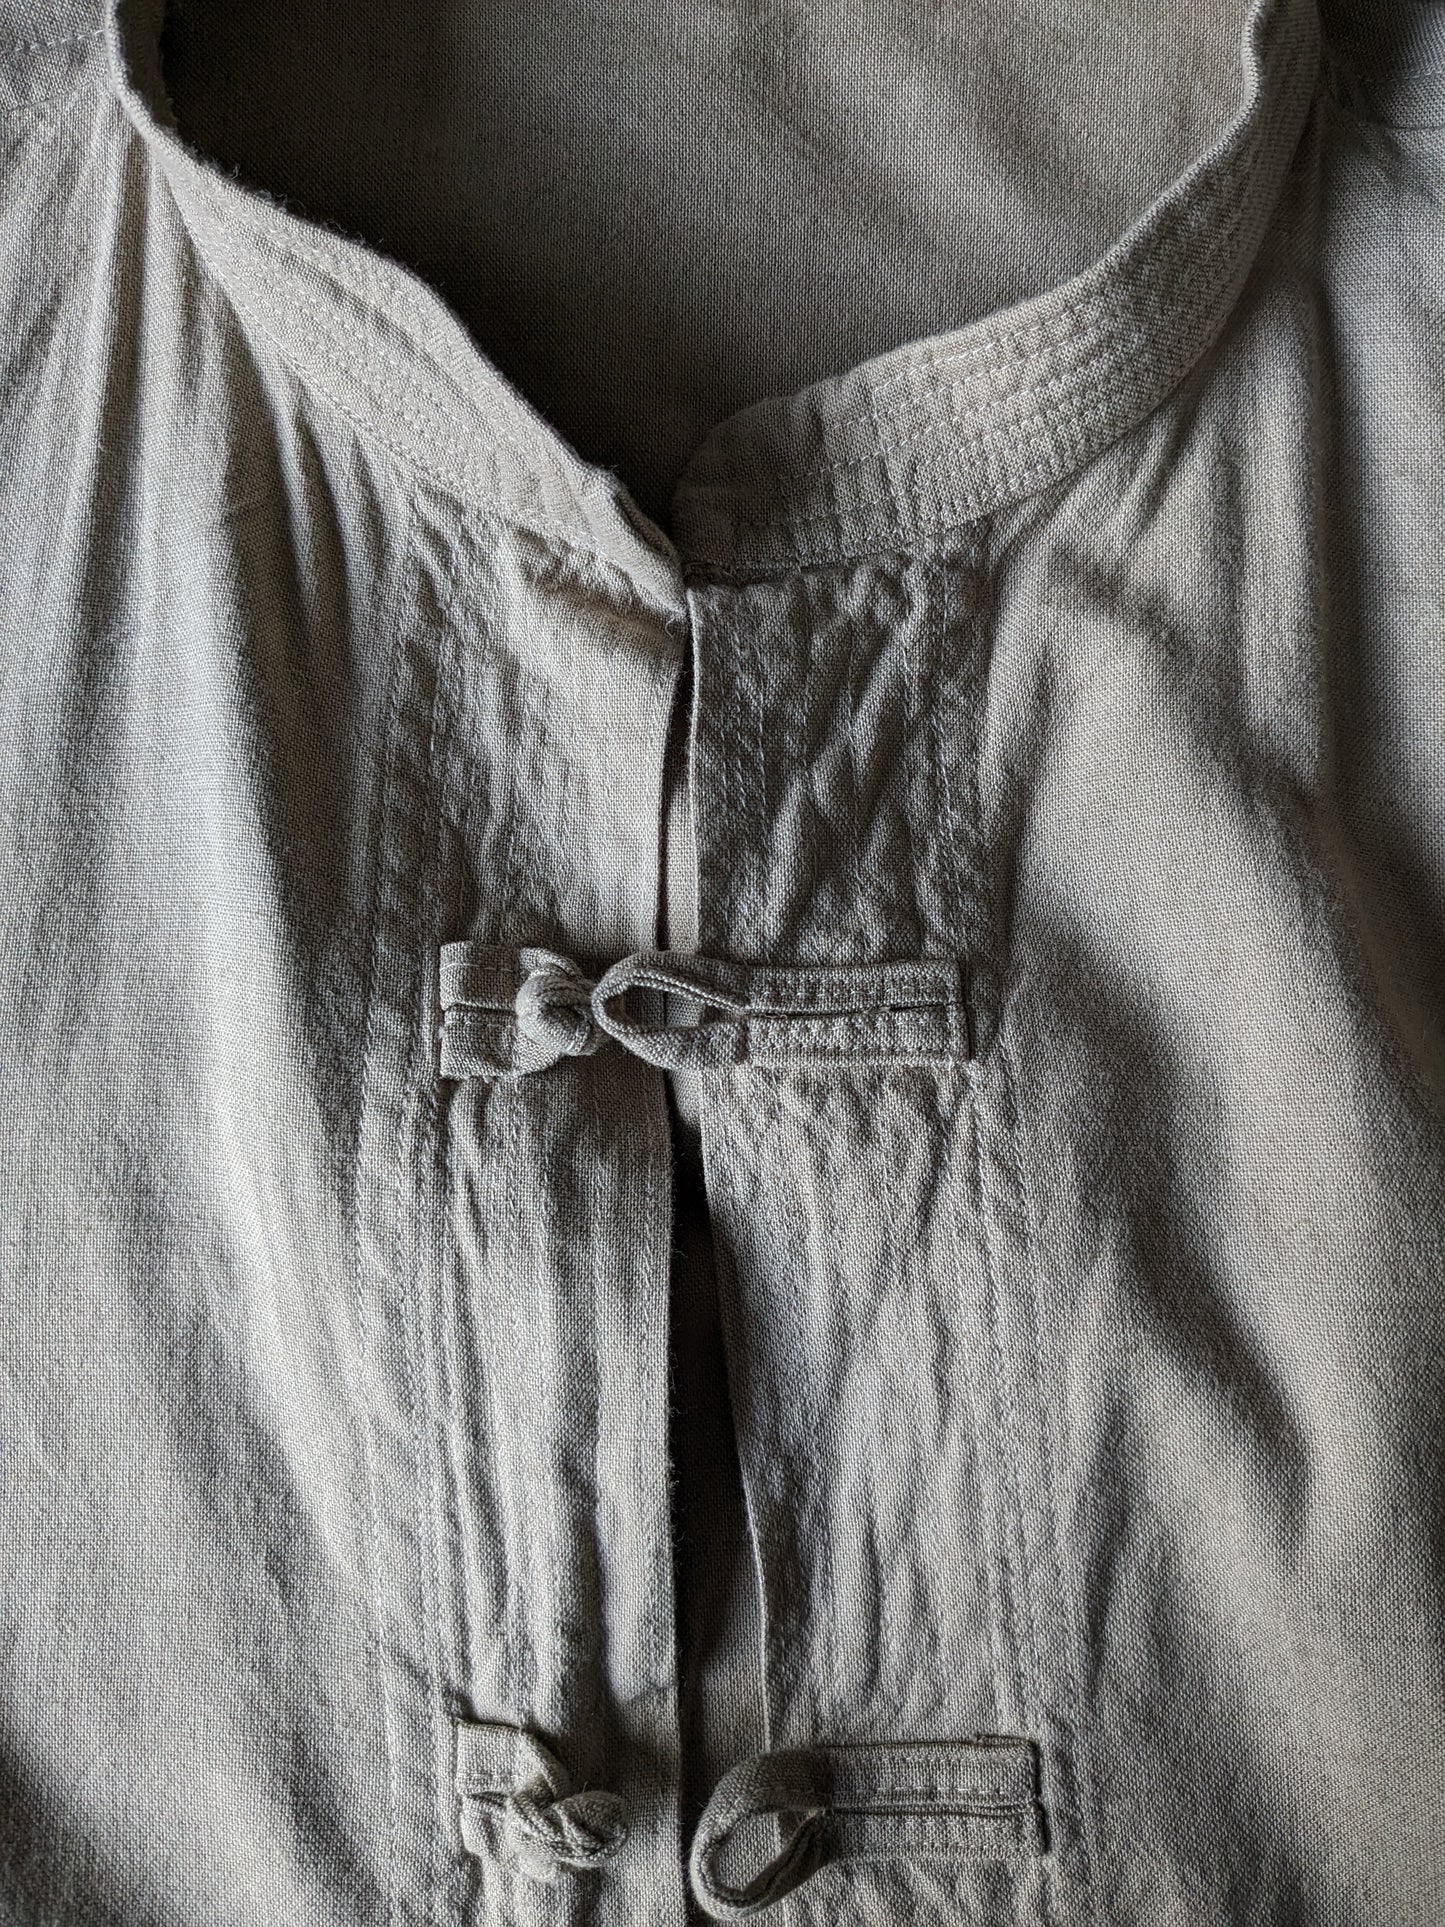 Vintage overhemd met stoffen knoopjes en mao / opstaande / farmer kraag. Beige gekleurd. Maat 2XL / XXL.